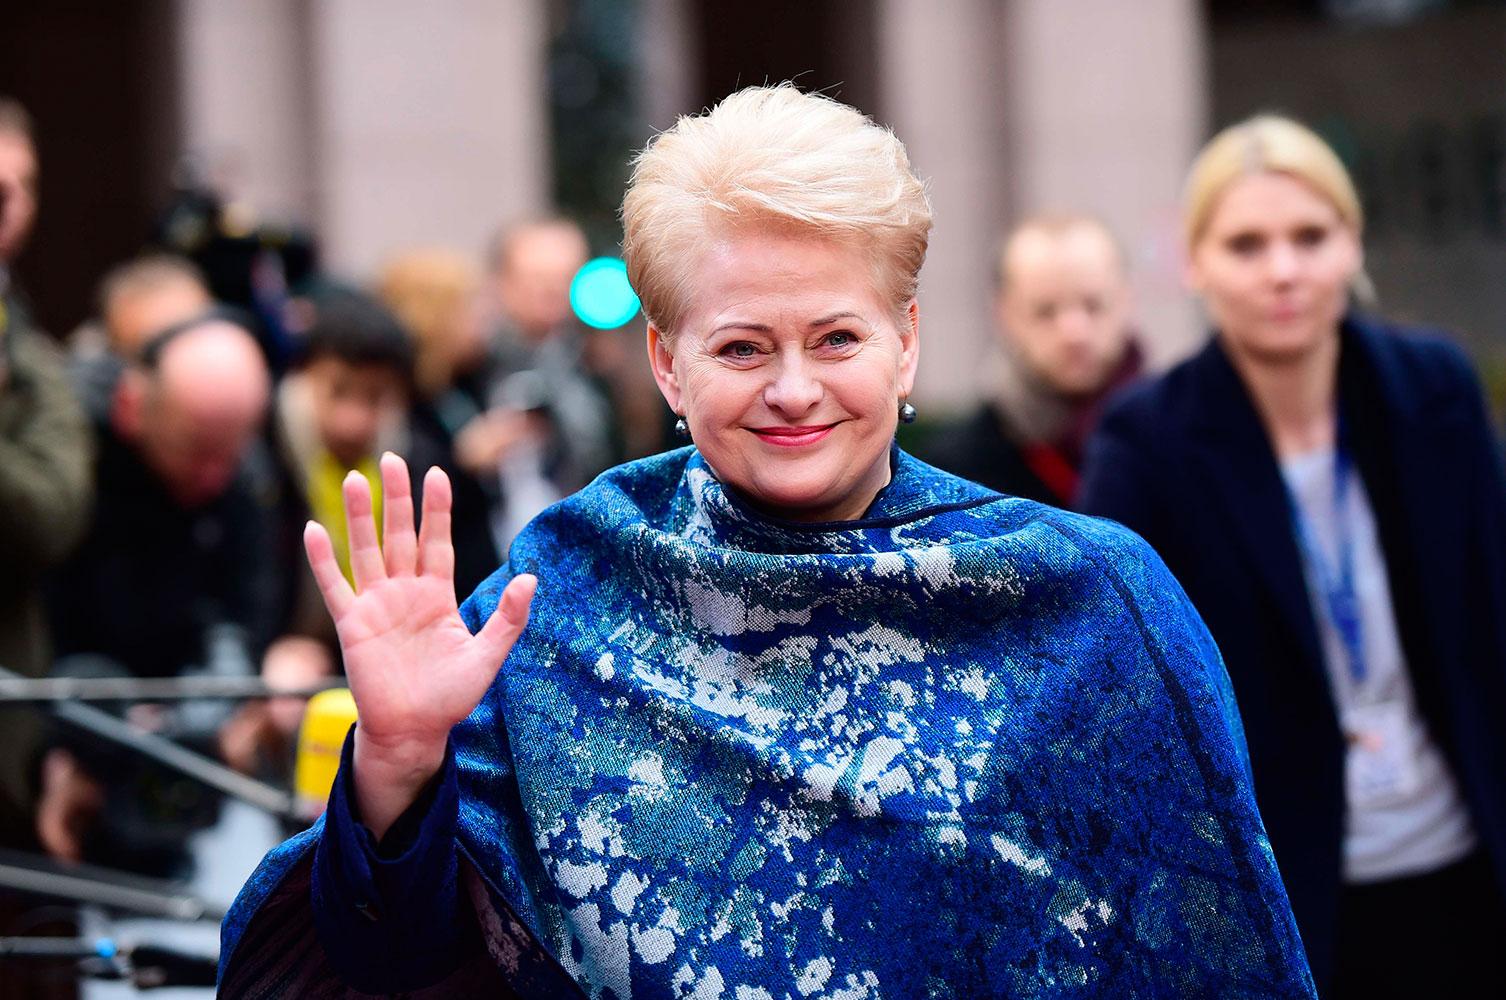 Litauens president Dalia Grybauskaite.